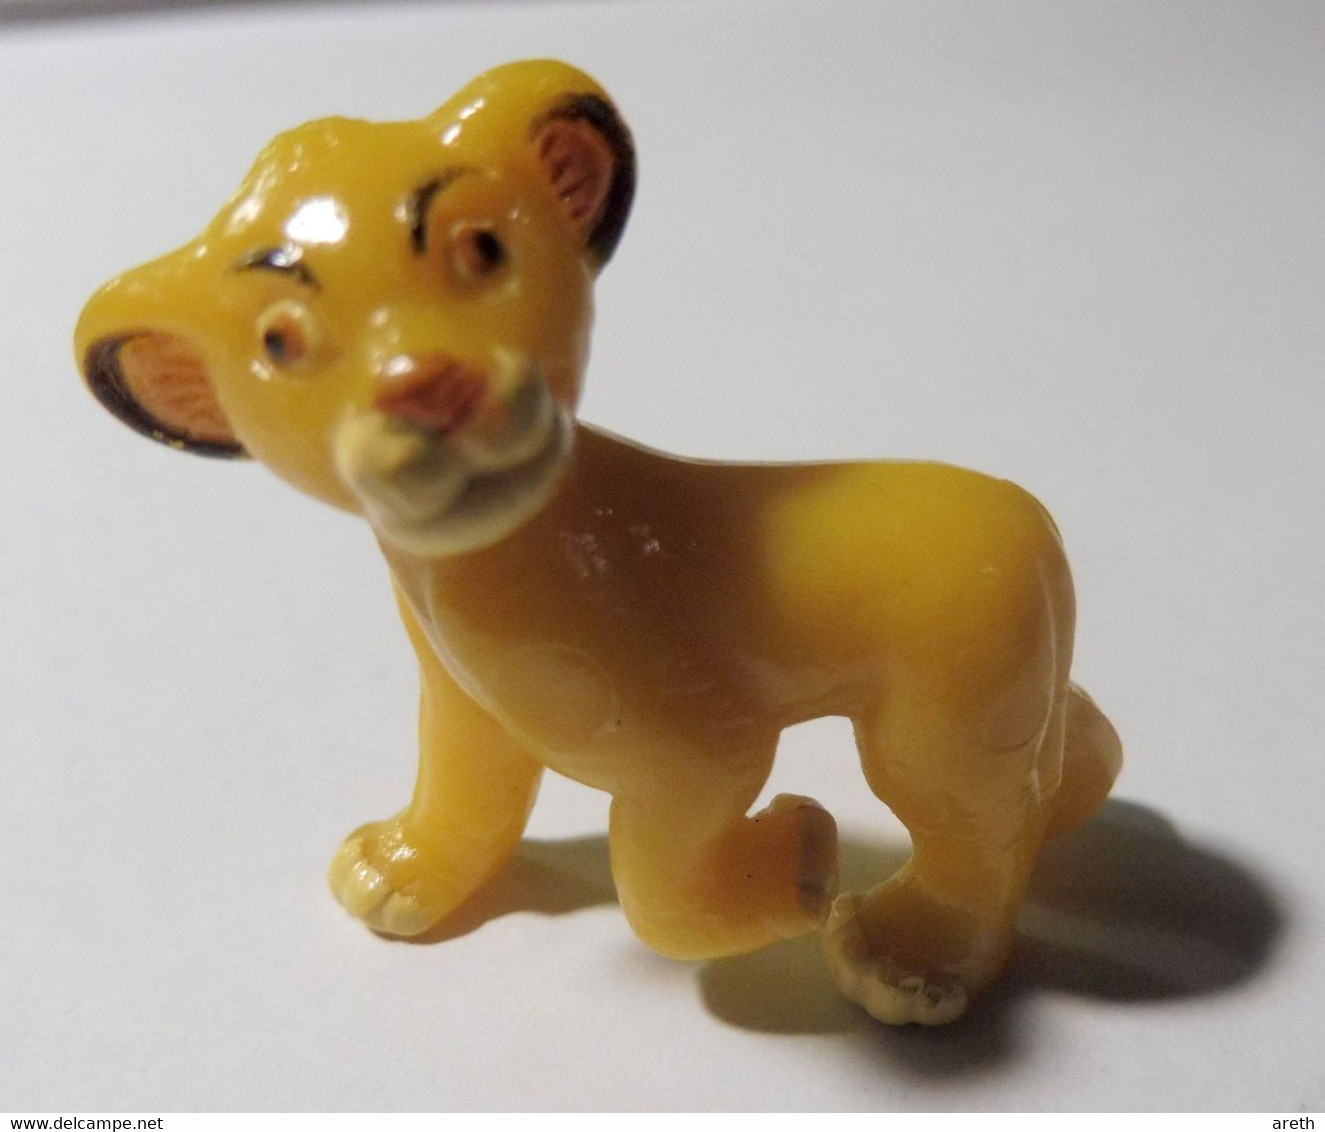 Figurine Disney : Le Roi Lion : Simba